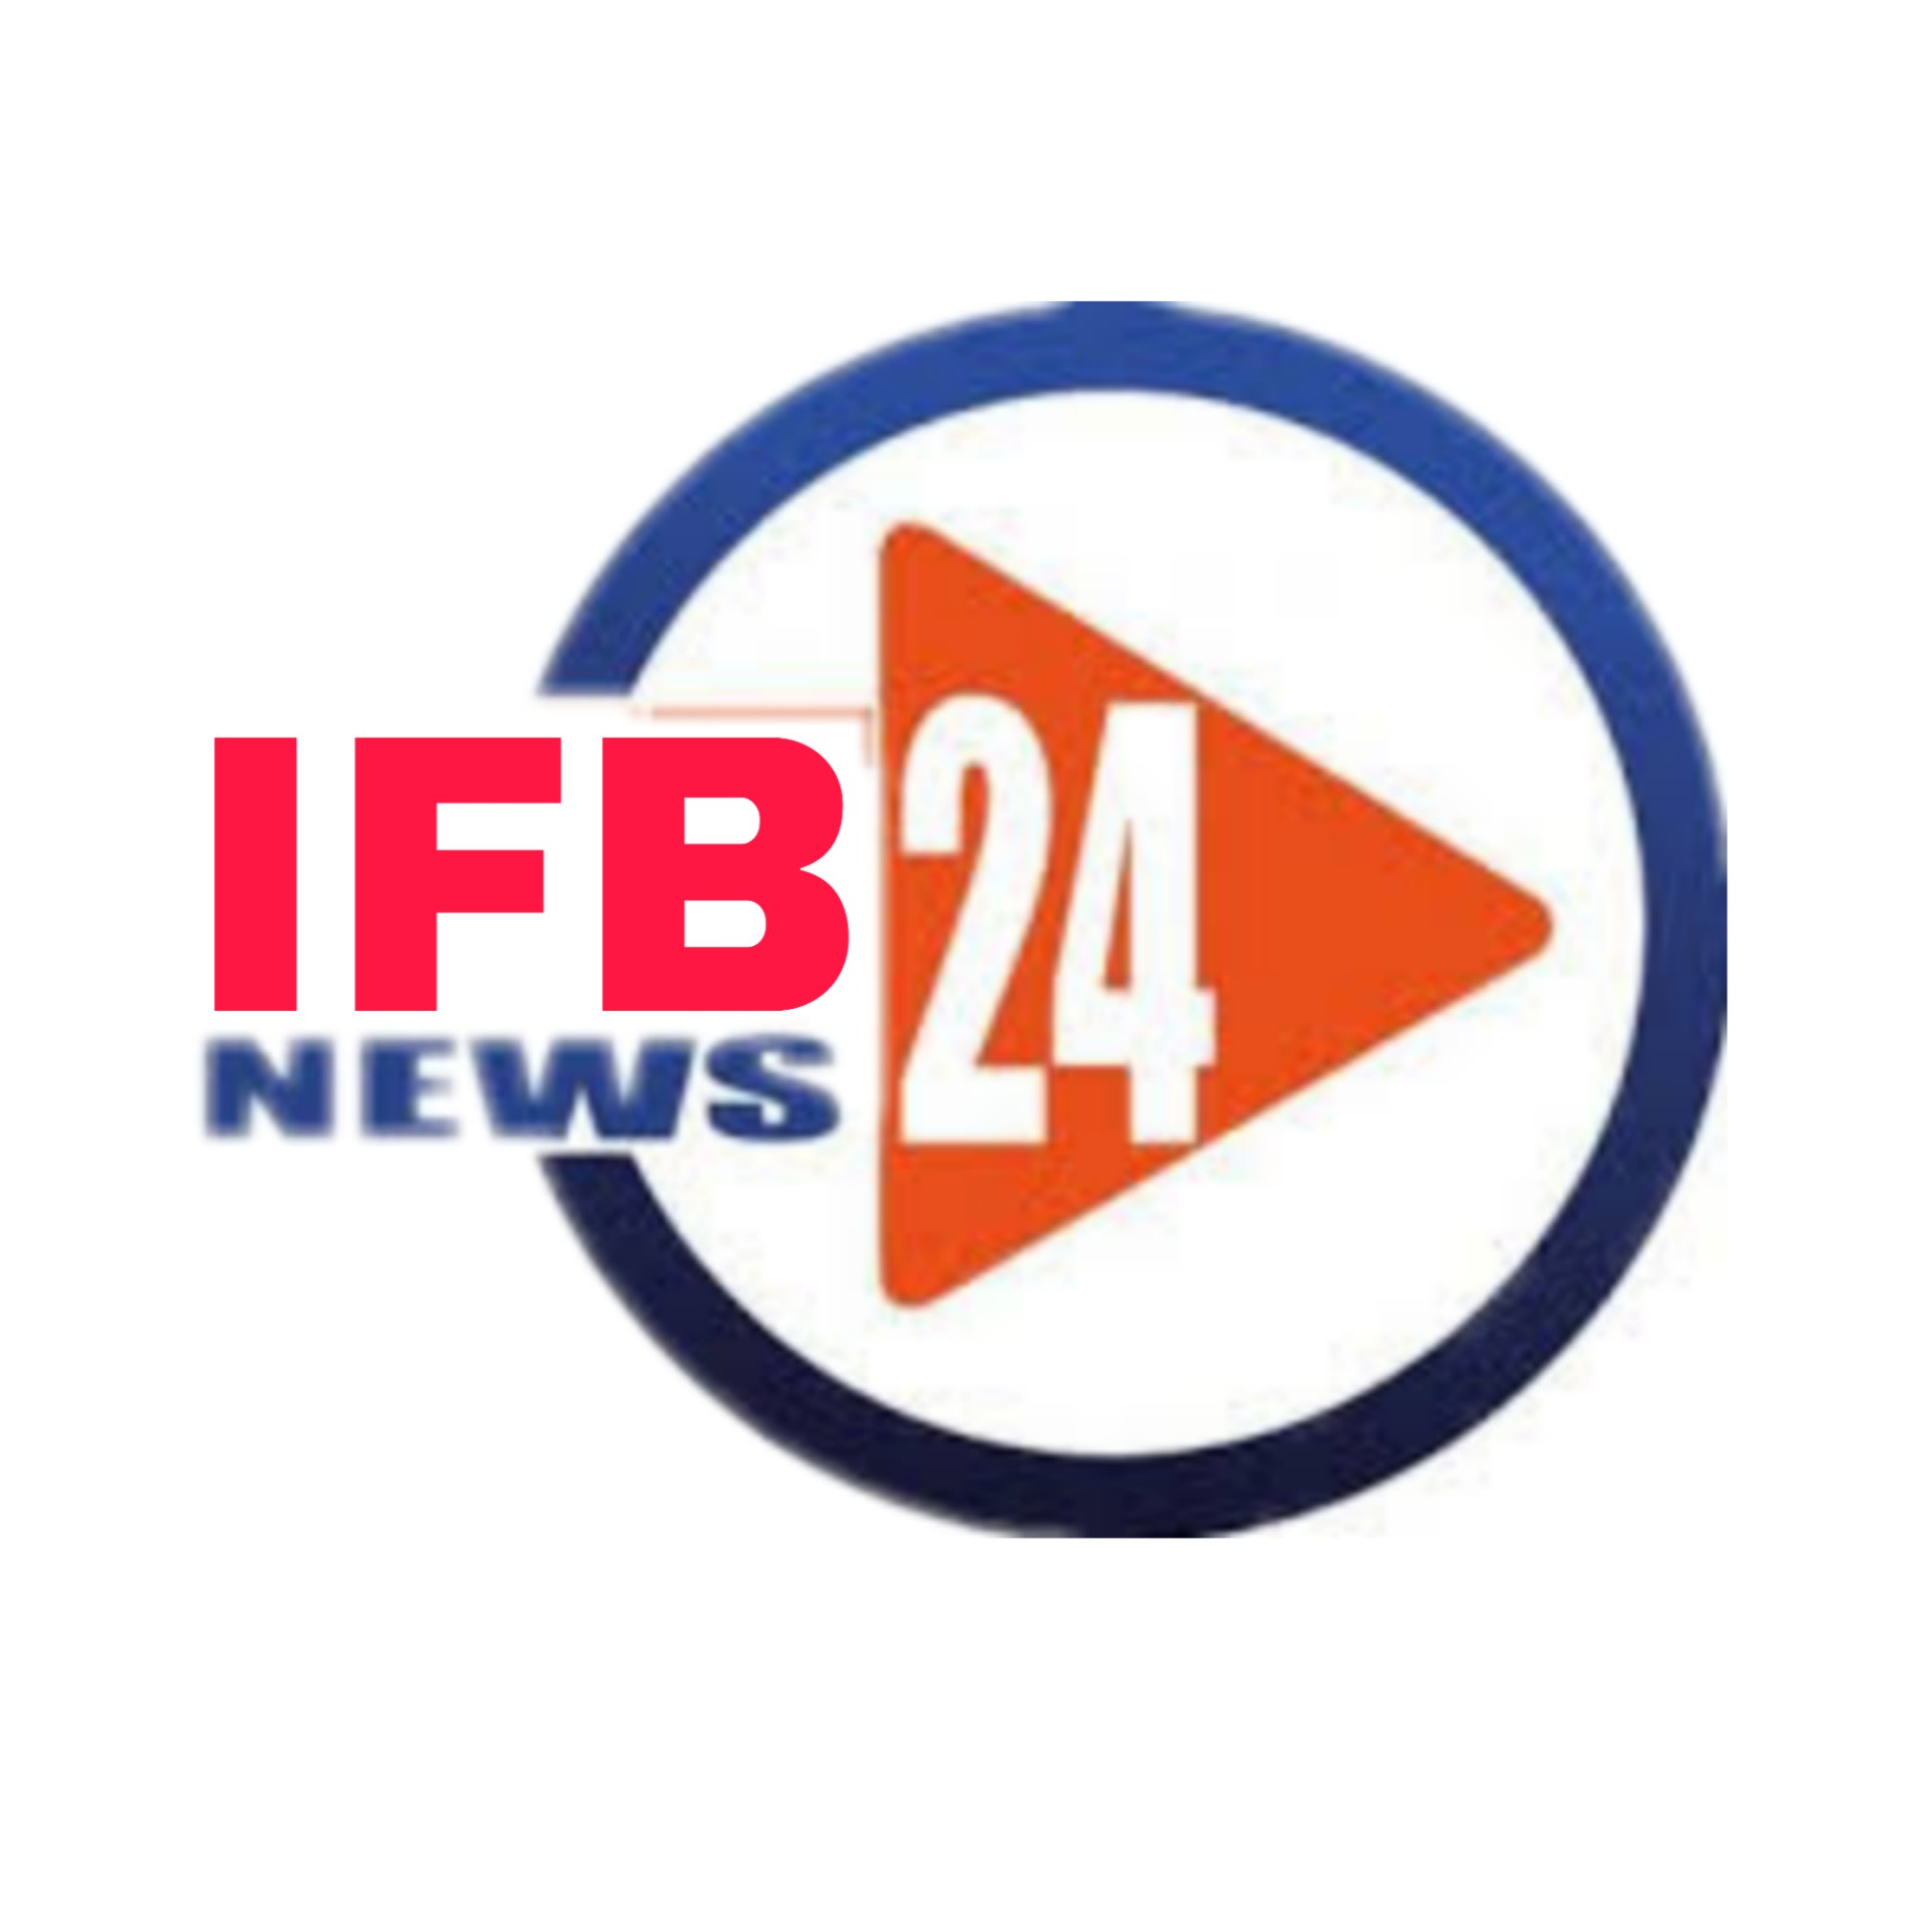 IFB News 24